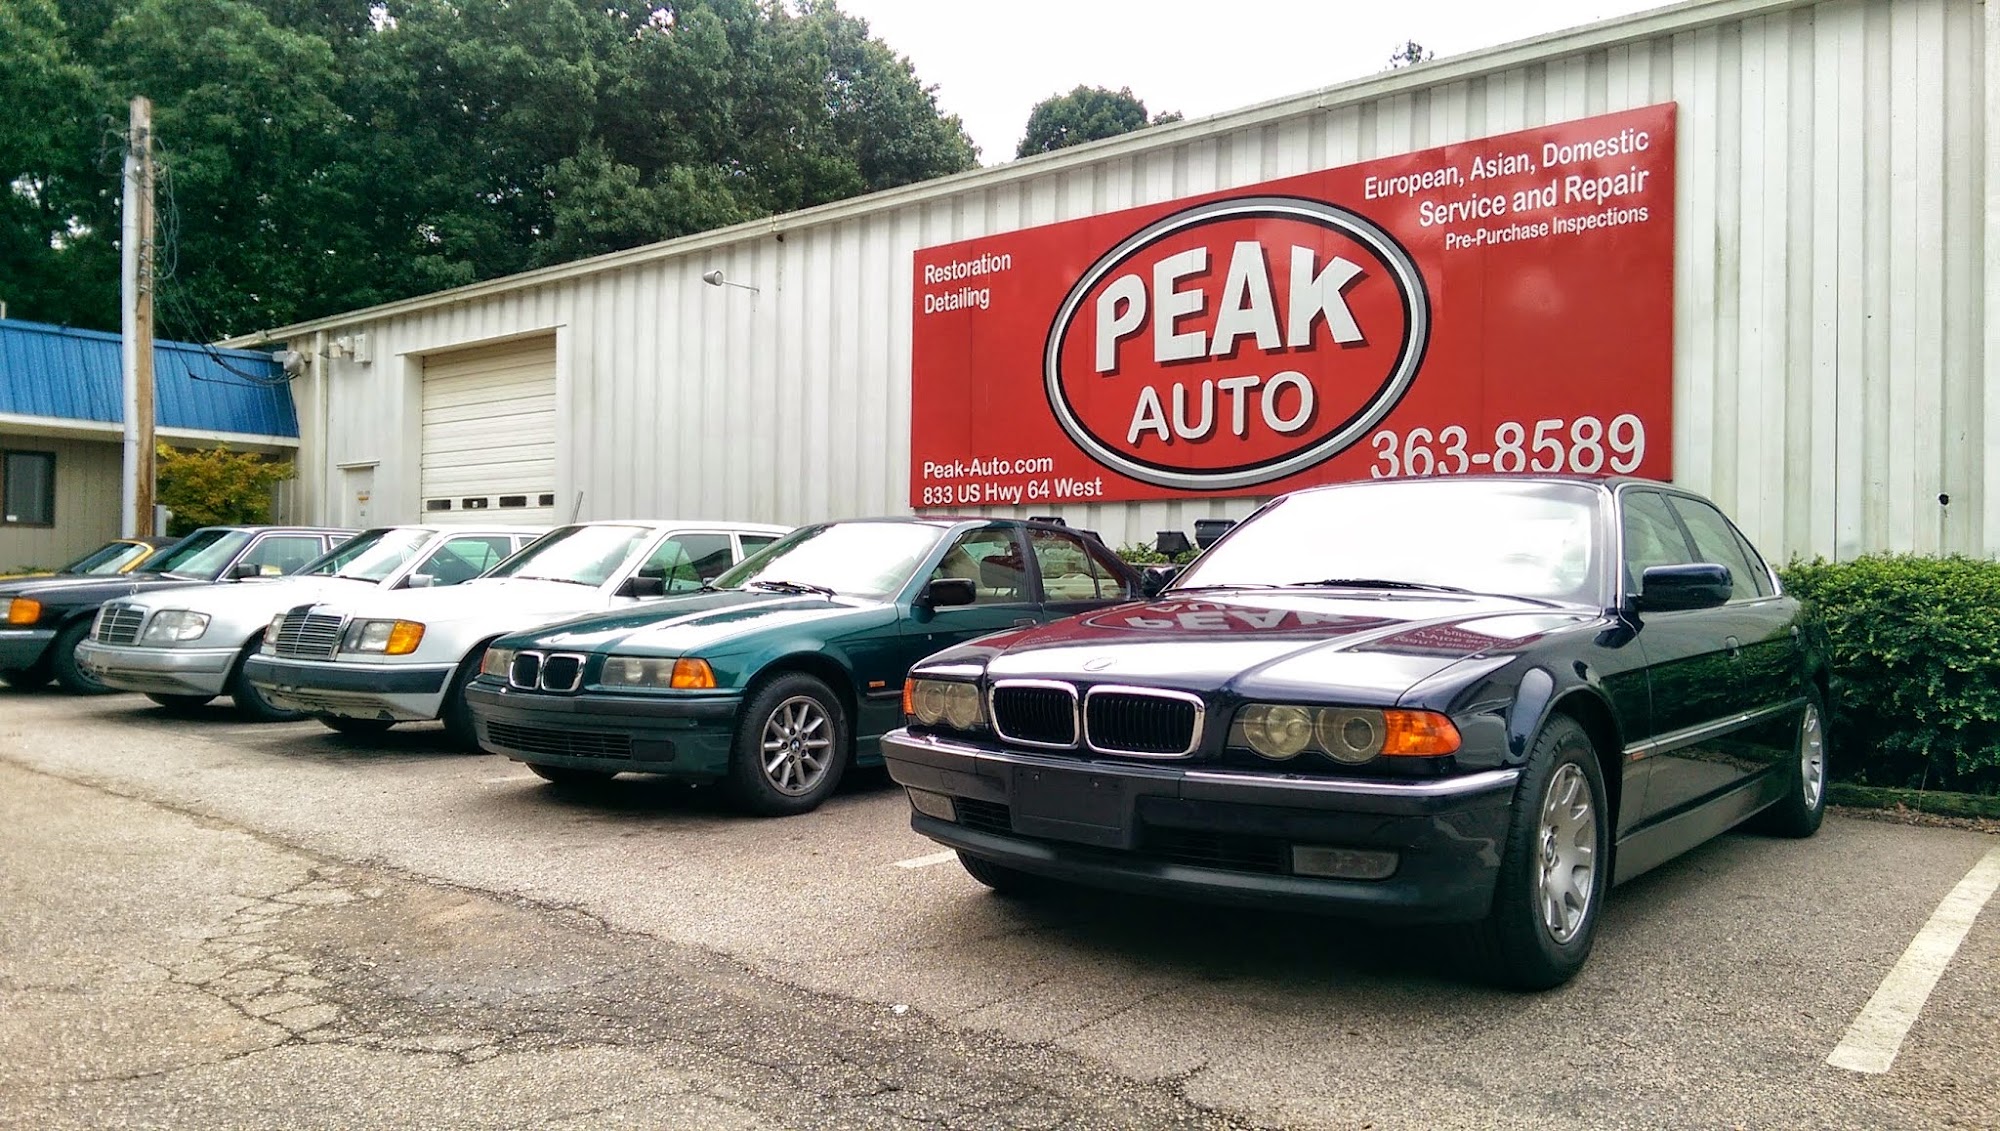 Peak Auto Service & Repair for European, Import, & Domestics in Apex and Cary